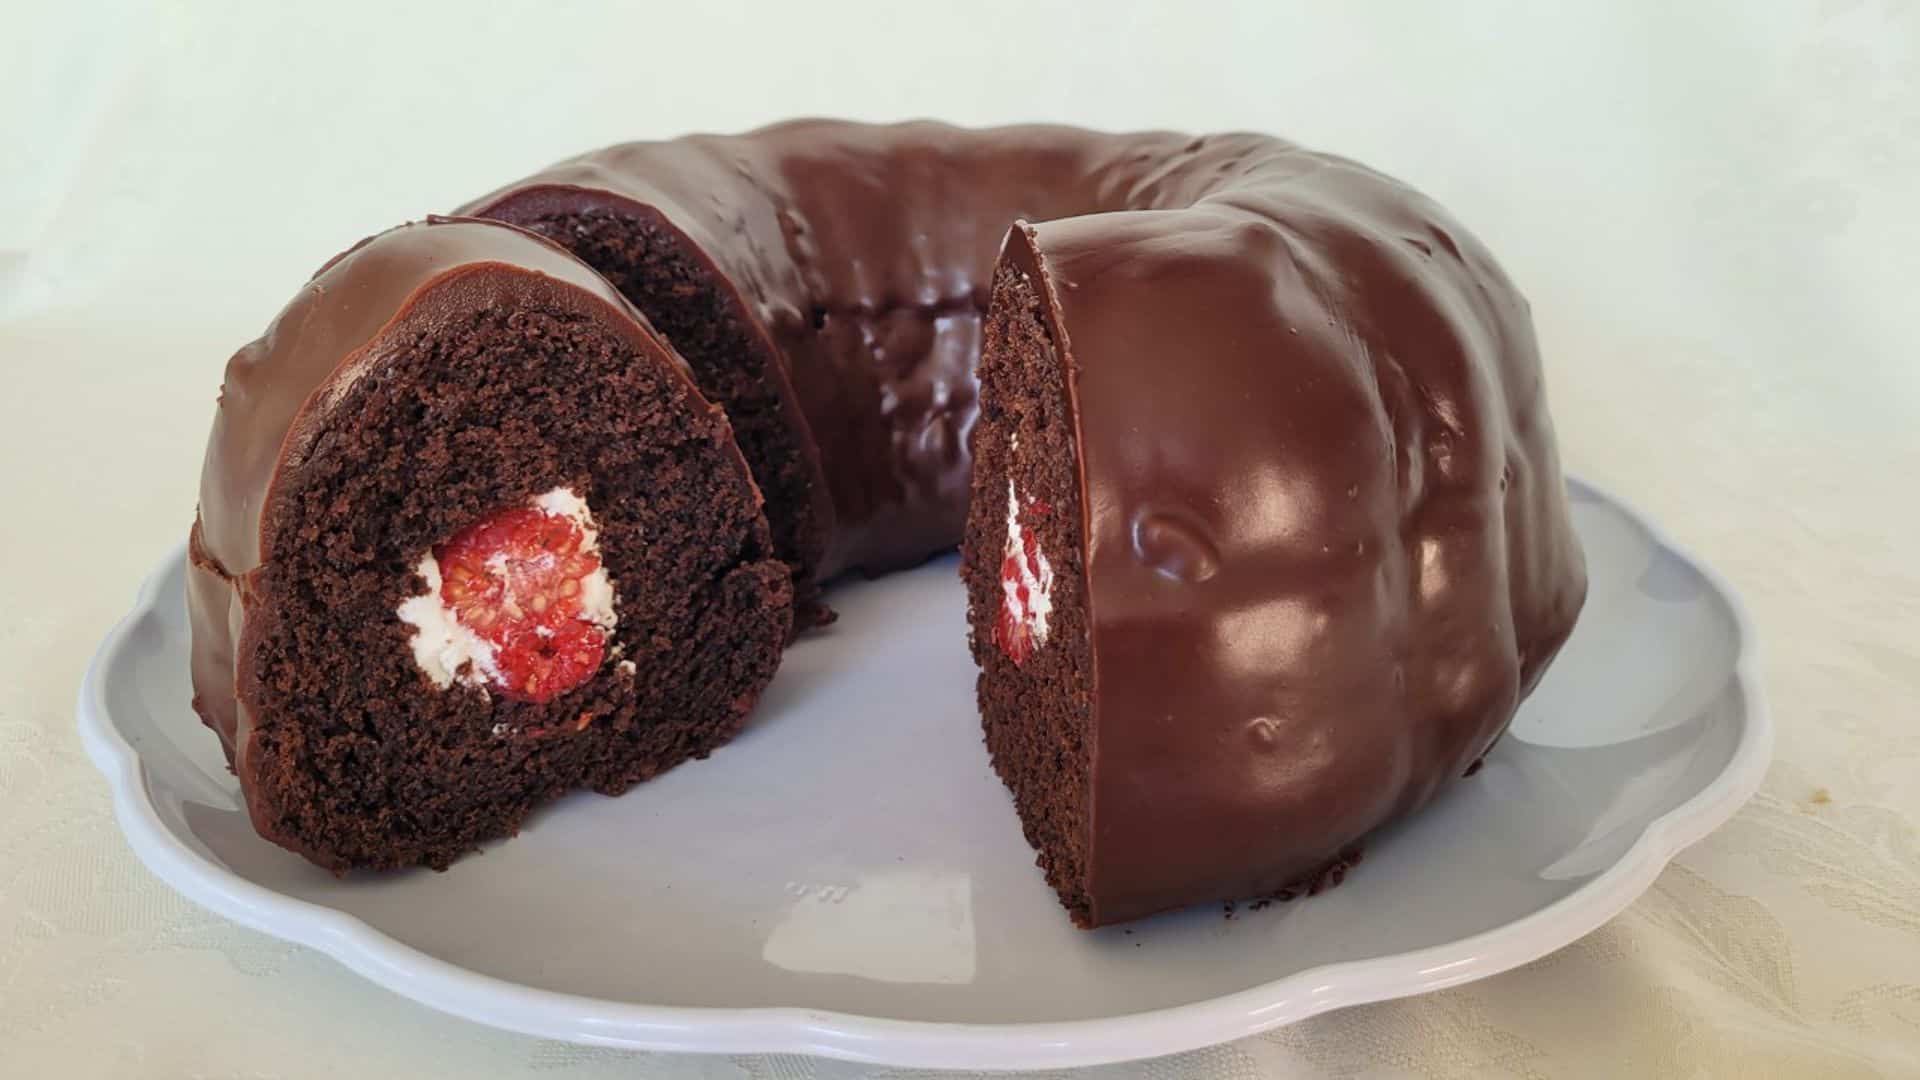 chocolate Bundt cake with raspberries and cream